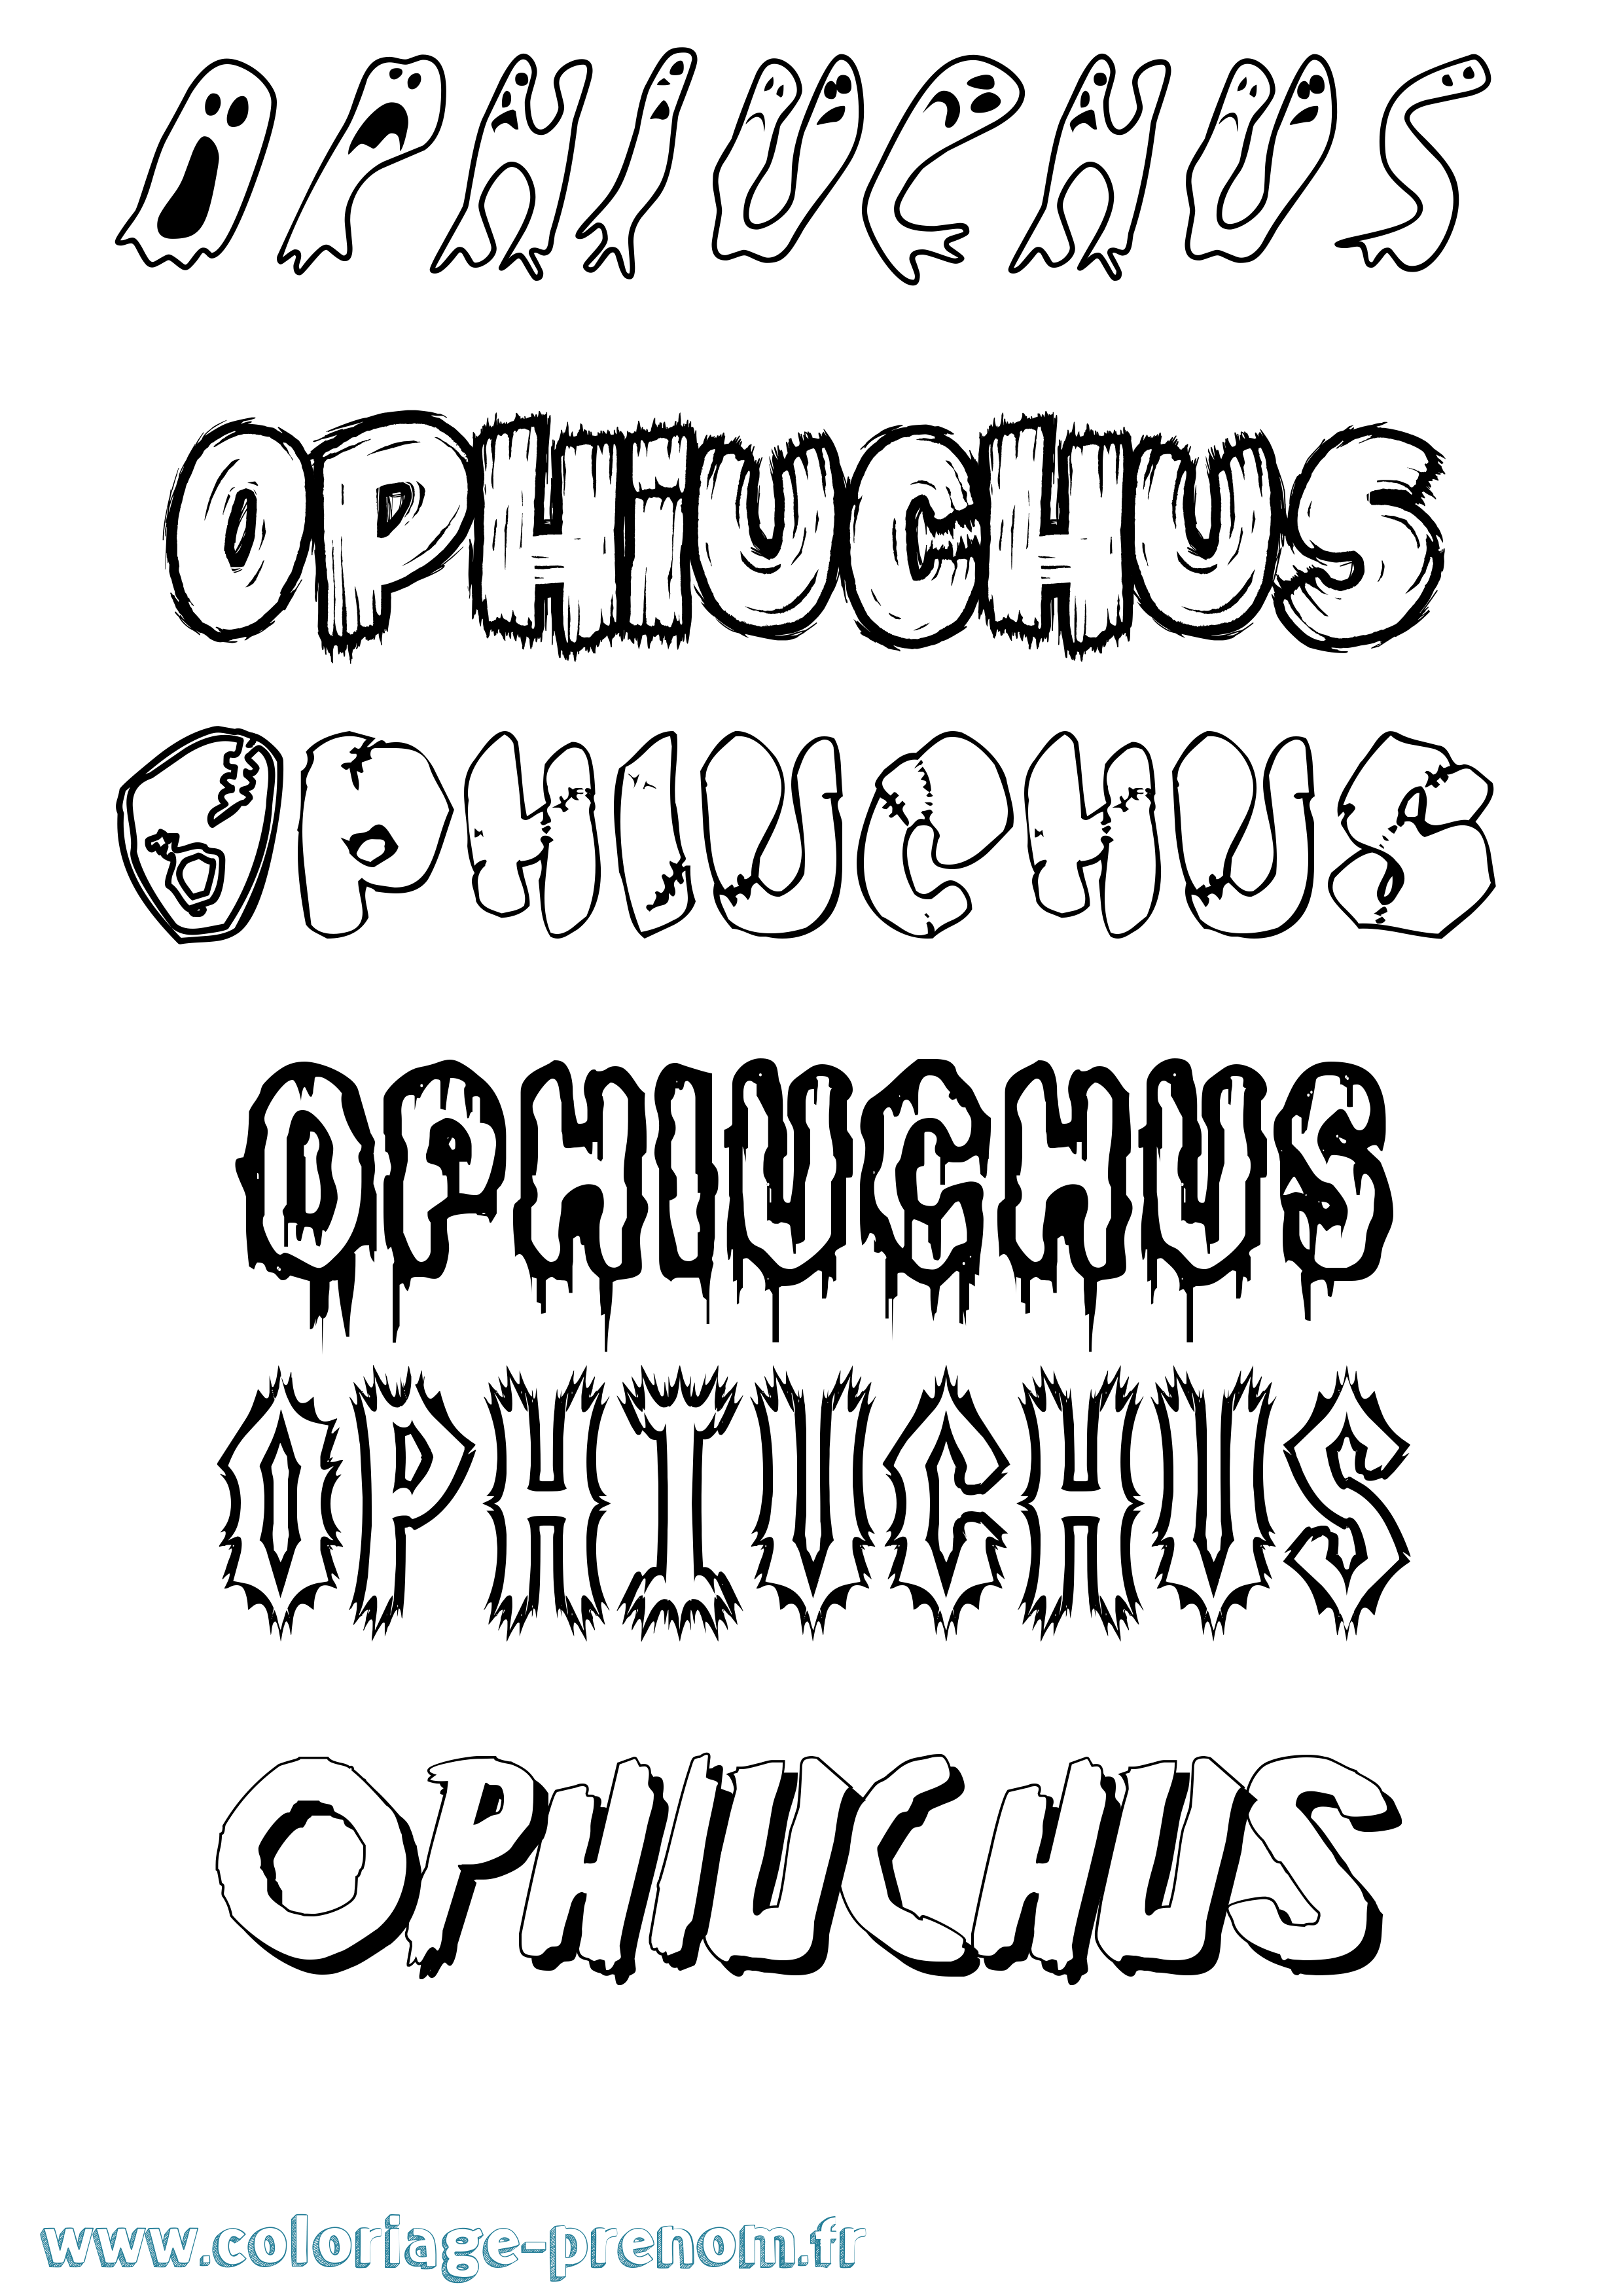 Coloriage prénom Ophiuchus Frisson